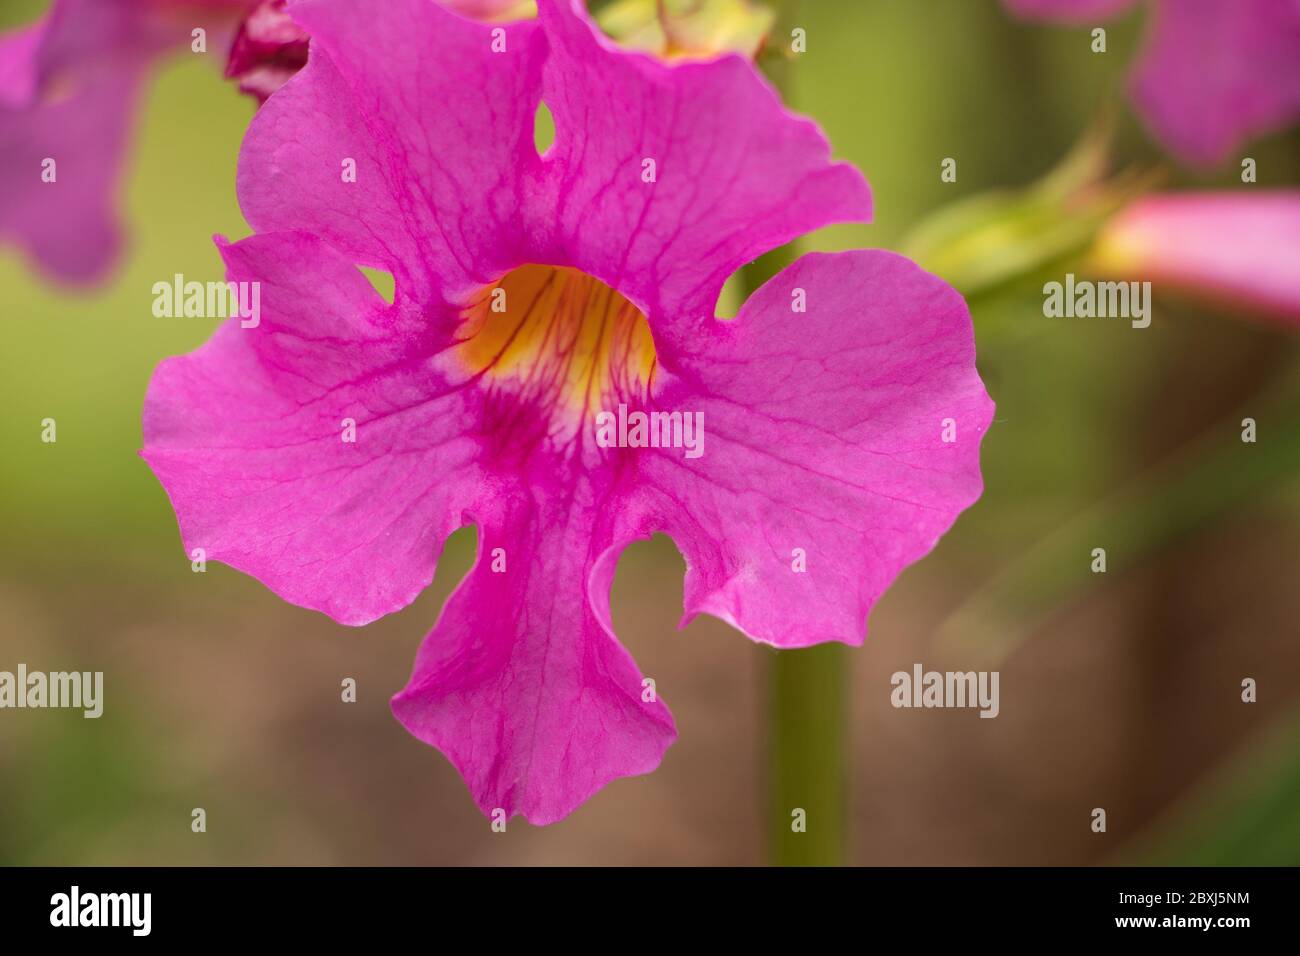 Closeup of a single pink and yellow gloxinia fern blossom Stock Photo